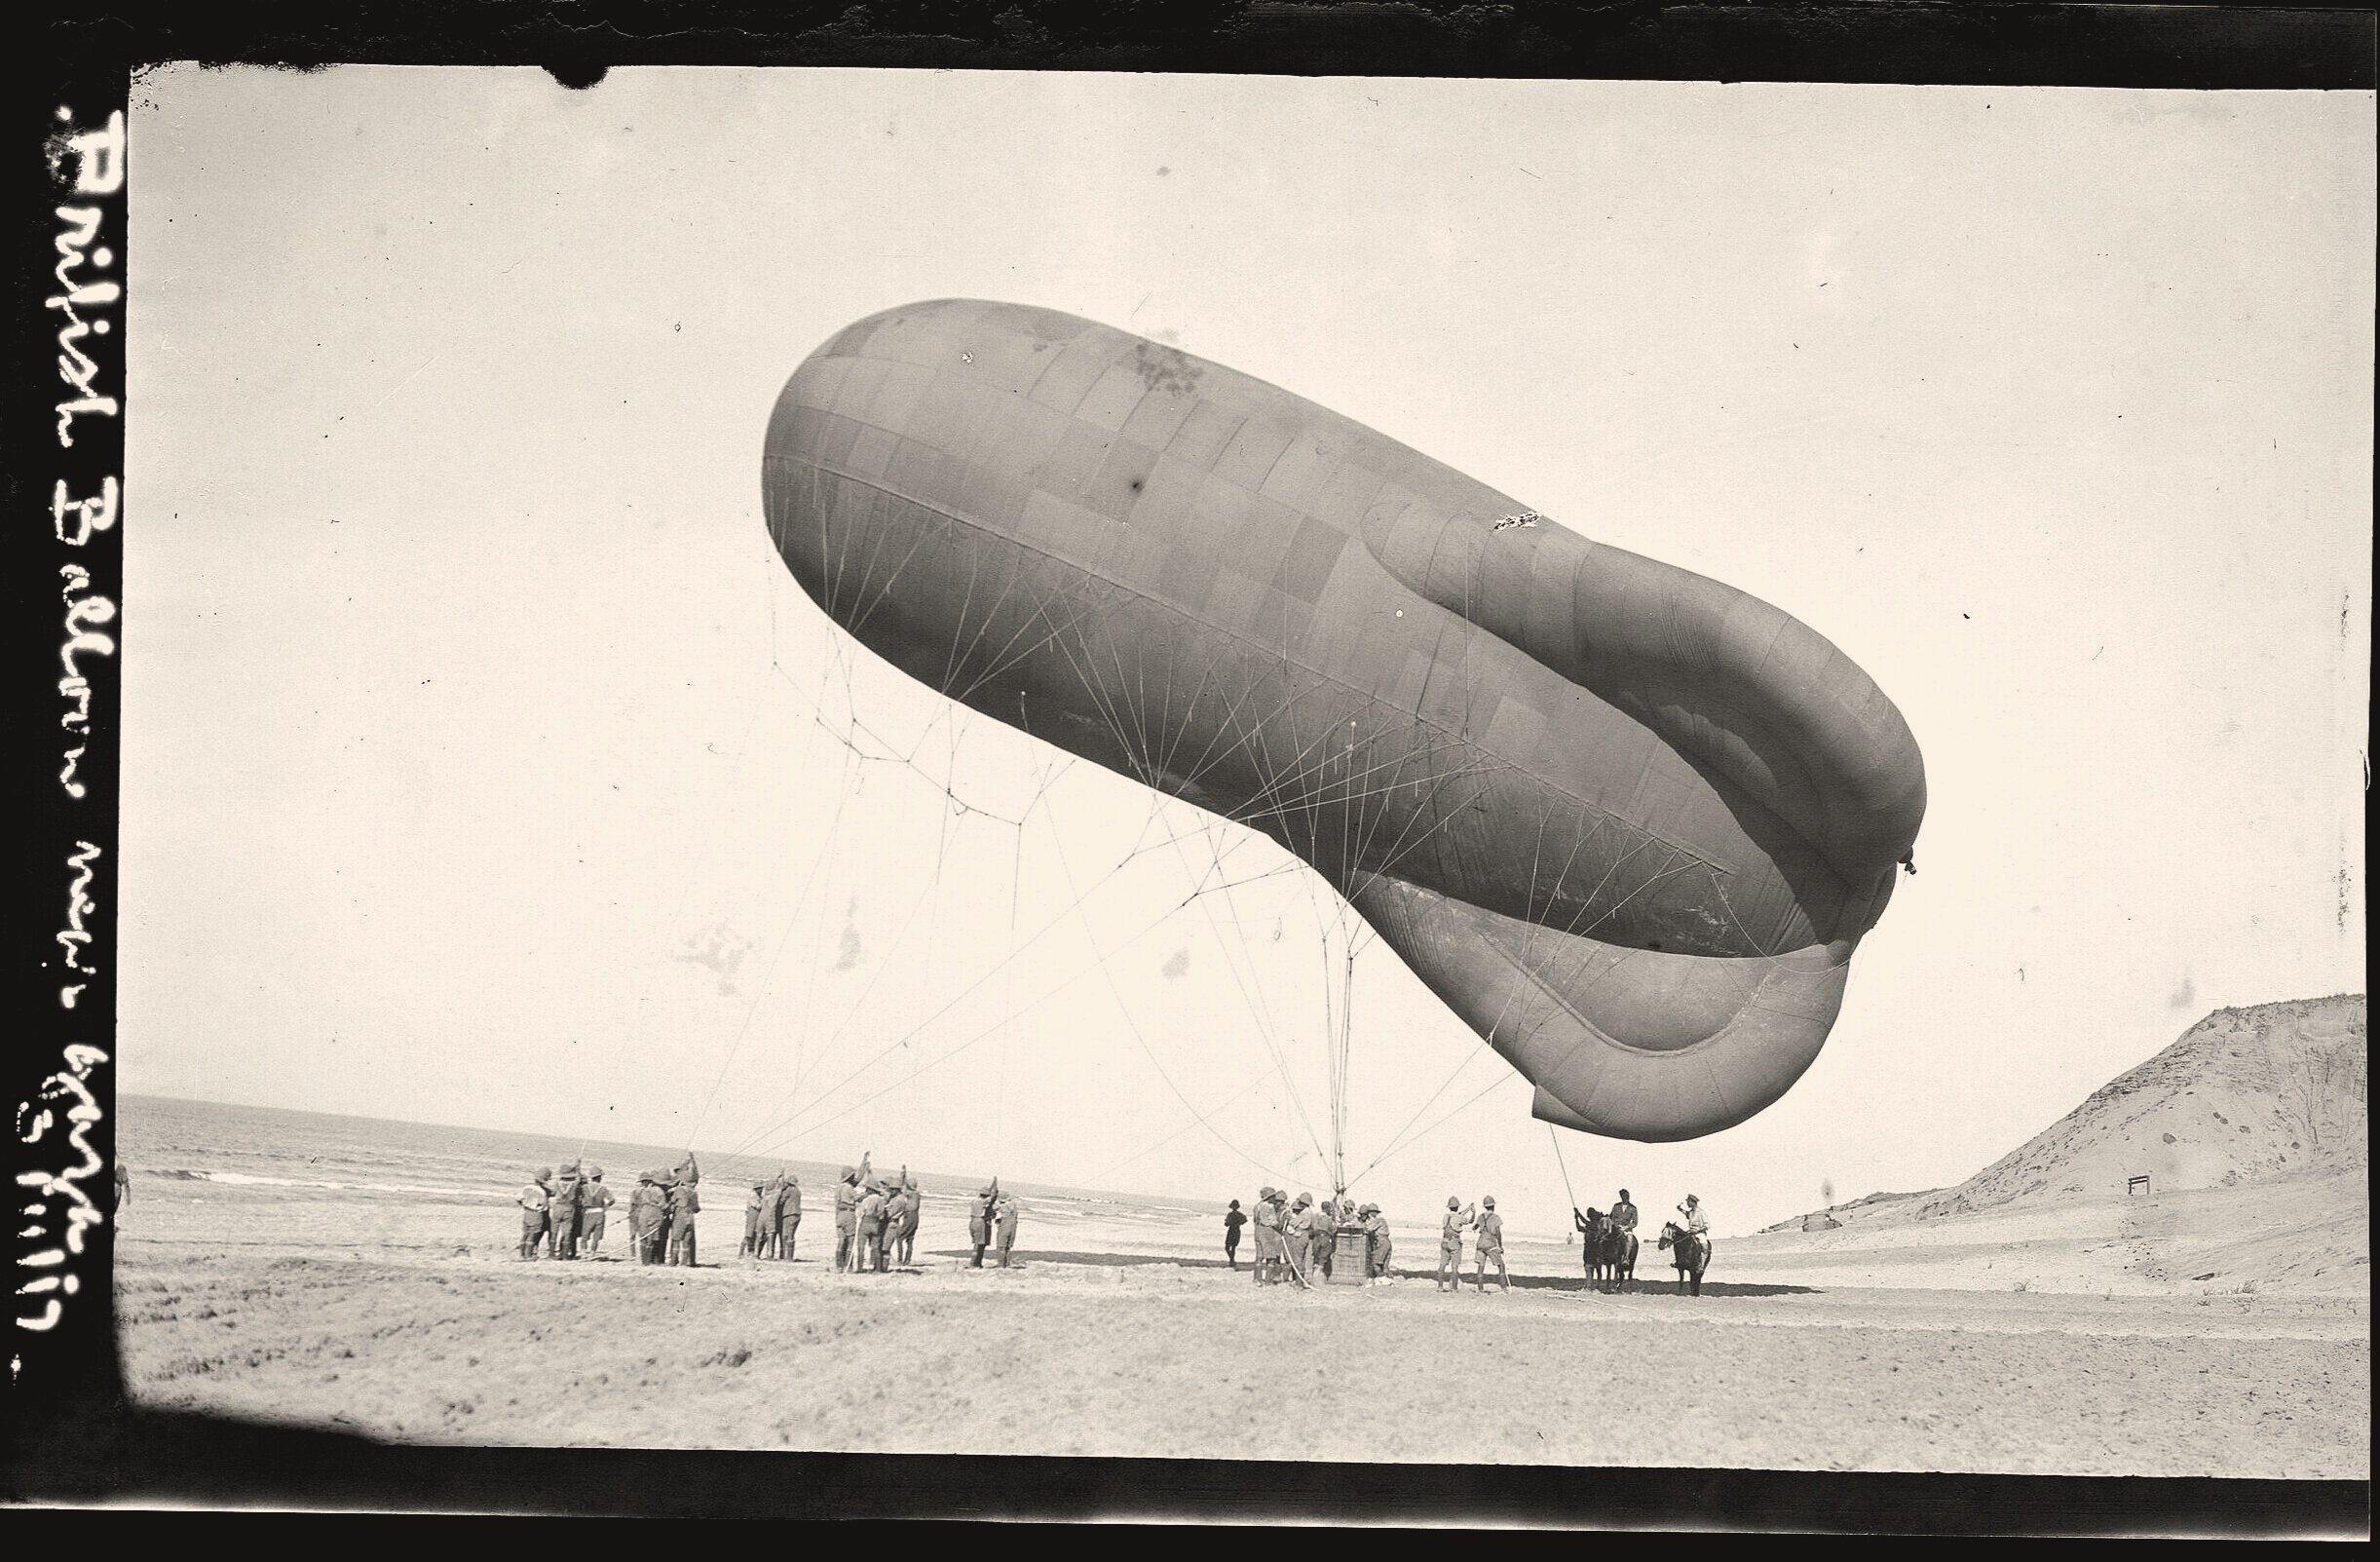 Launching an observation balloon 